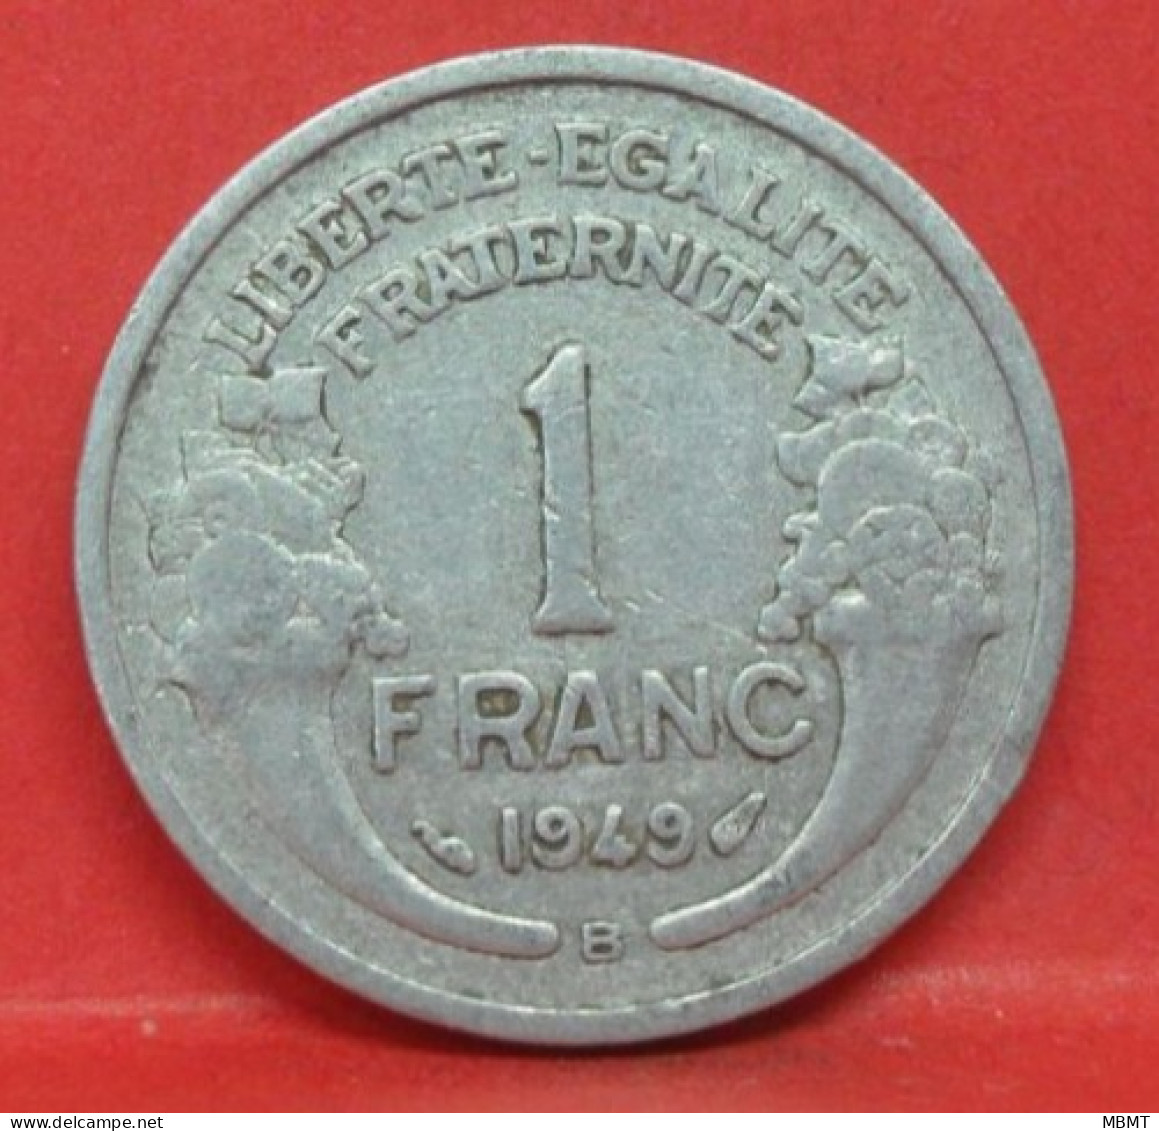 1 Franc Morlon Alu 1949 B - TB - Pièce Monnaie France - Article N°677 - 1 Franc